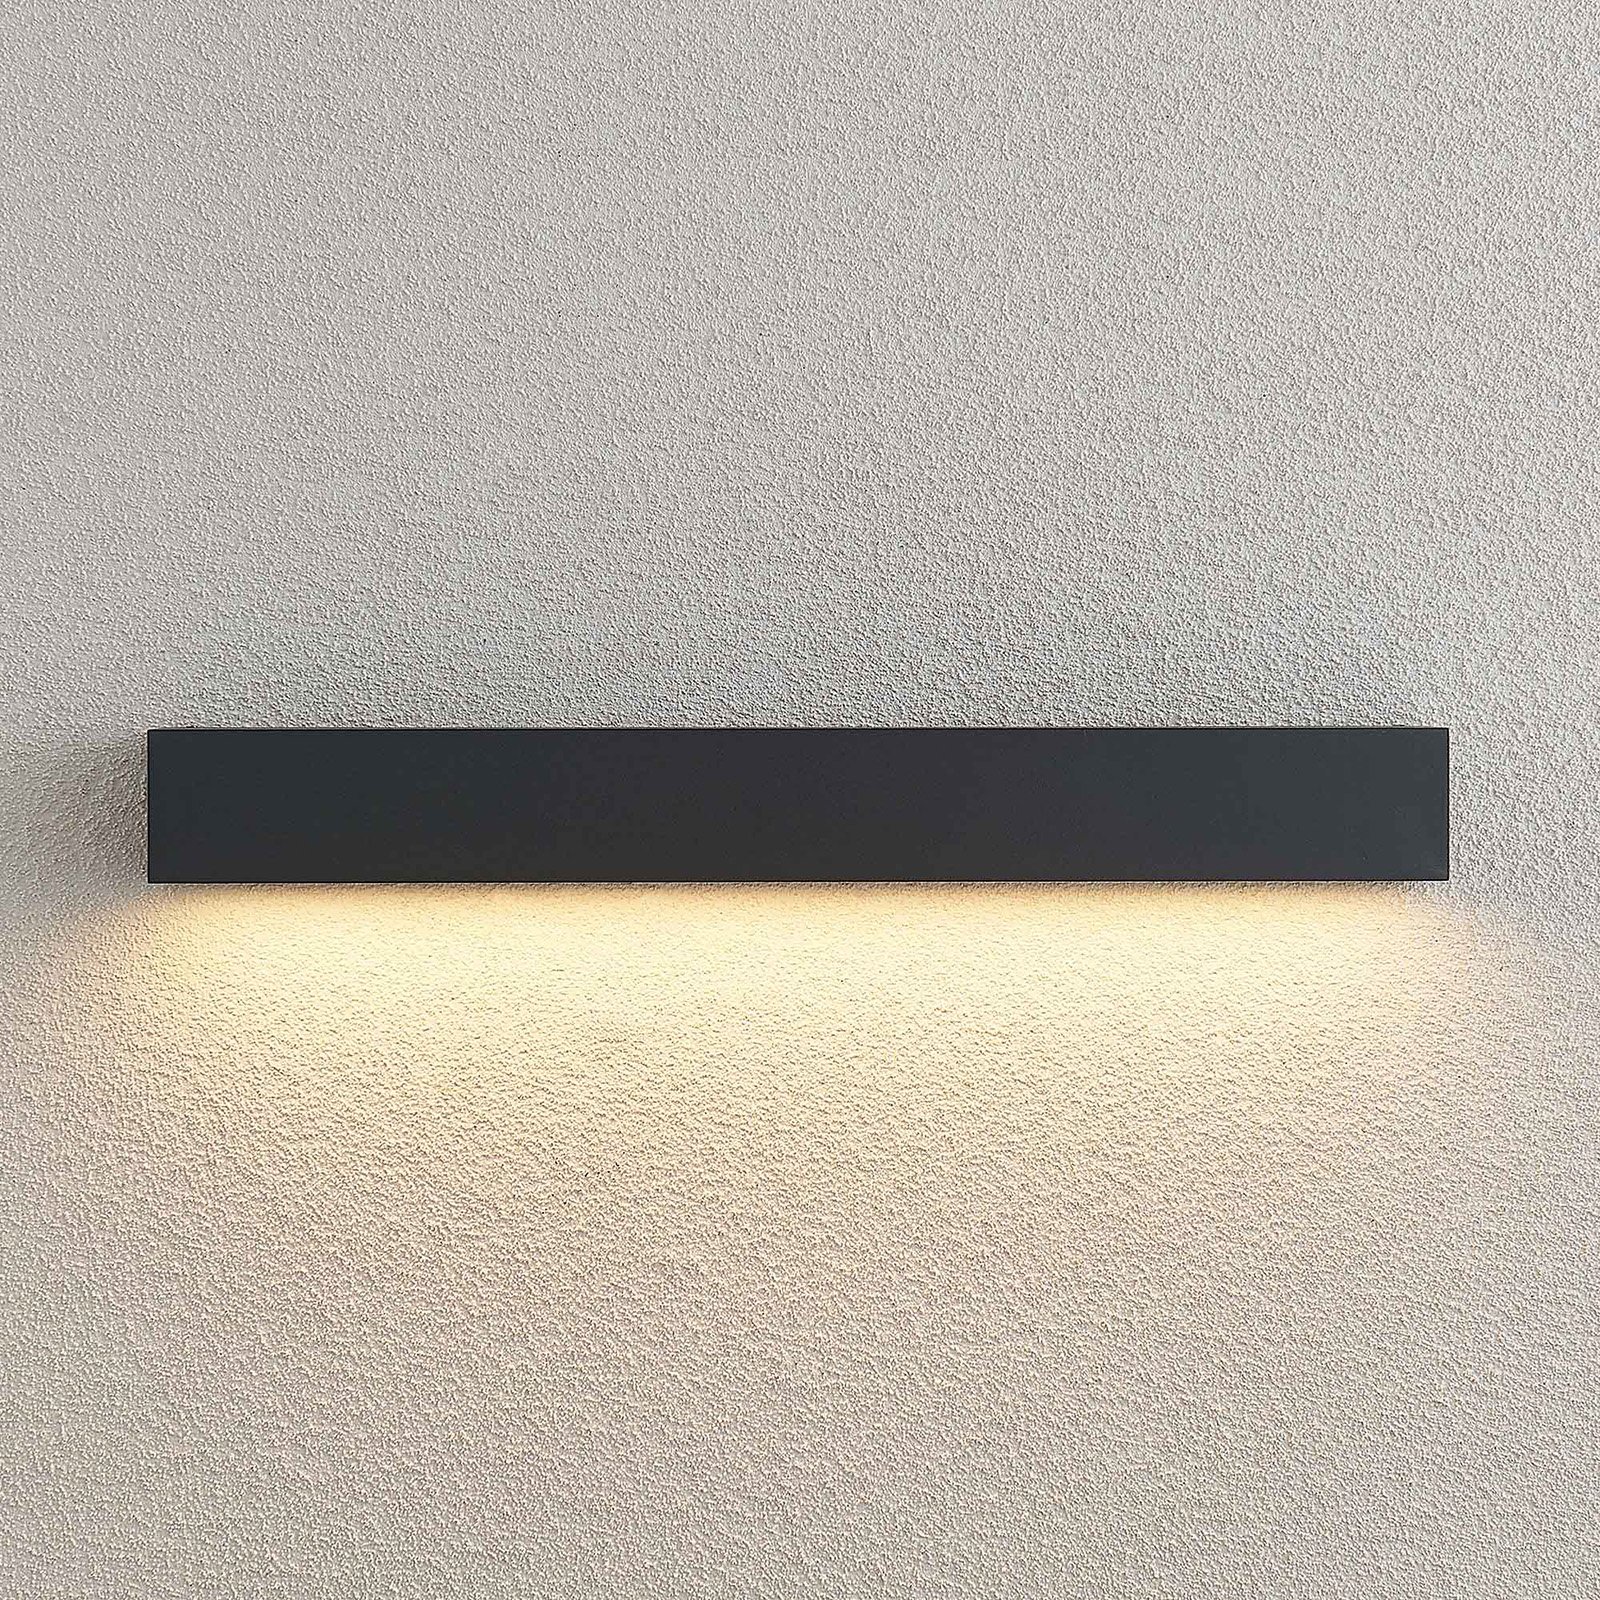 Lucande Lengo LED wall lamp, 50 cm graphite 1-bulb